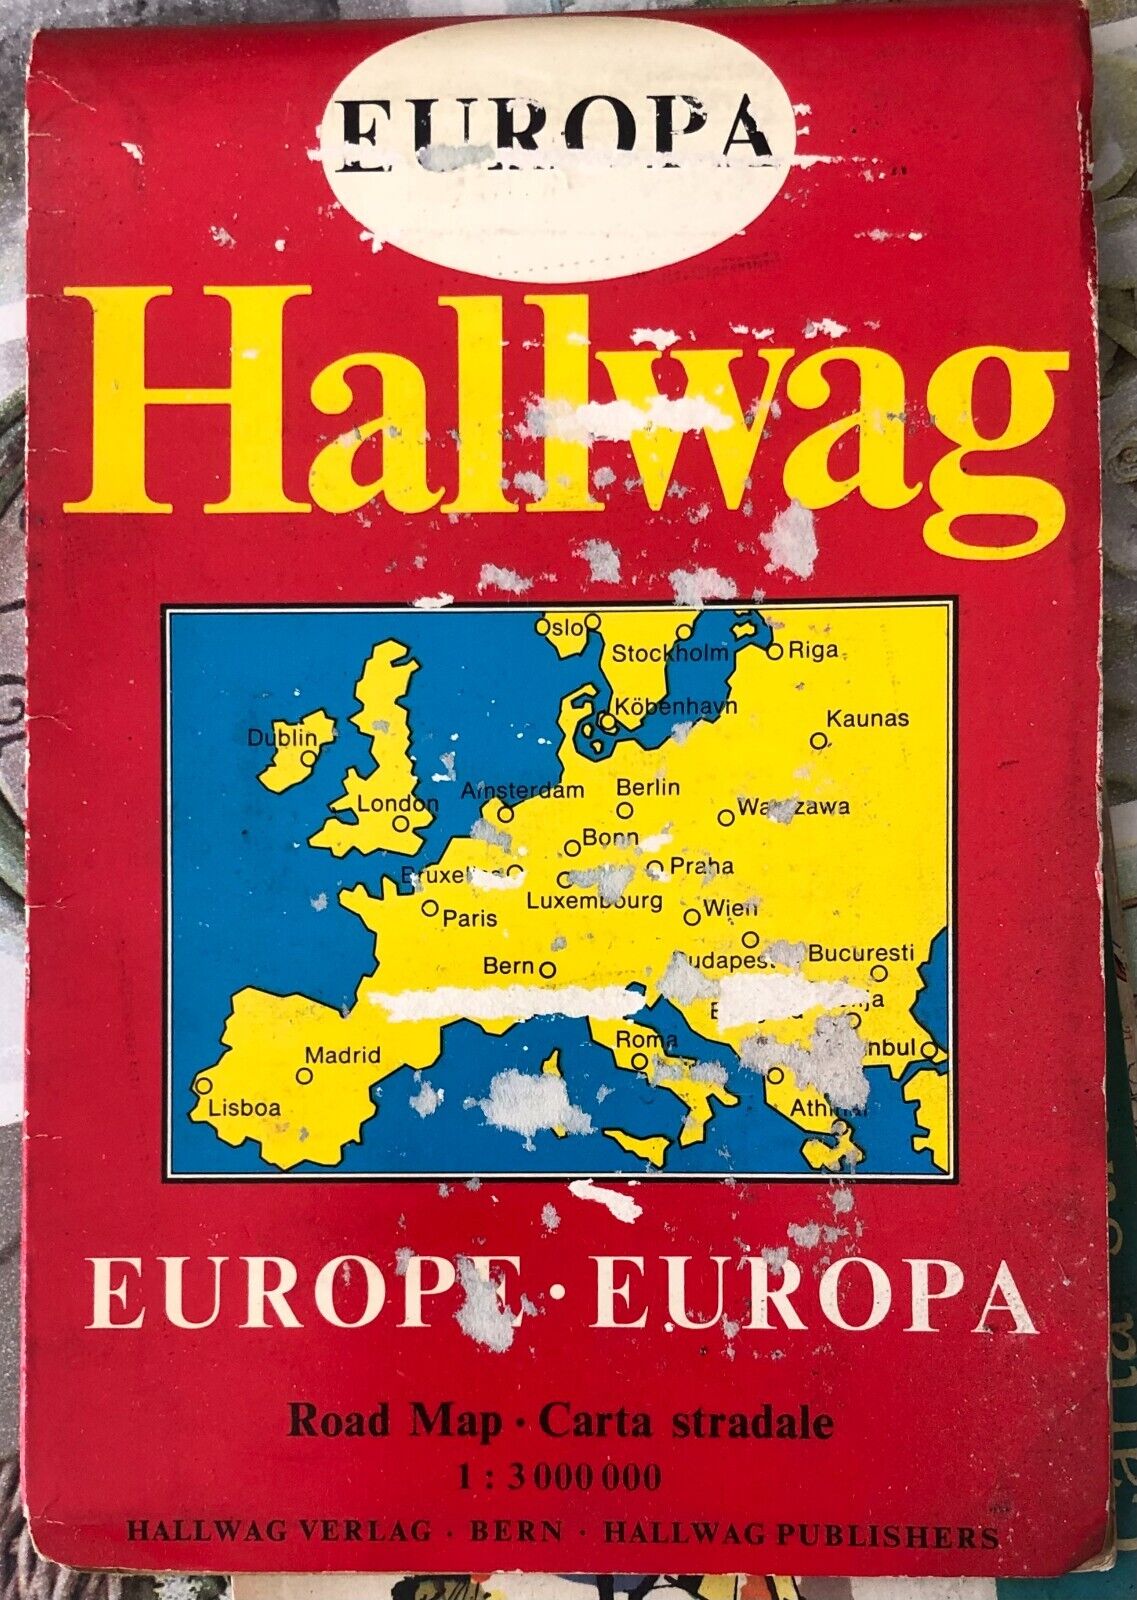 Europa Hallwag Carta stradale in 4 lingue di Hallwag Publishers, 1970, Hallwa